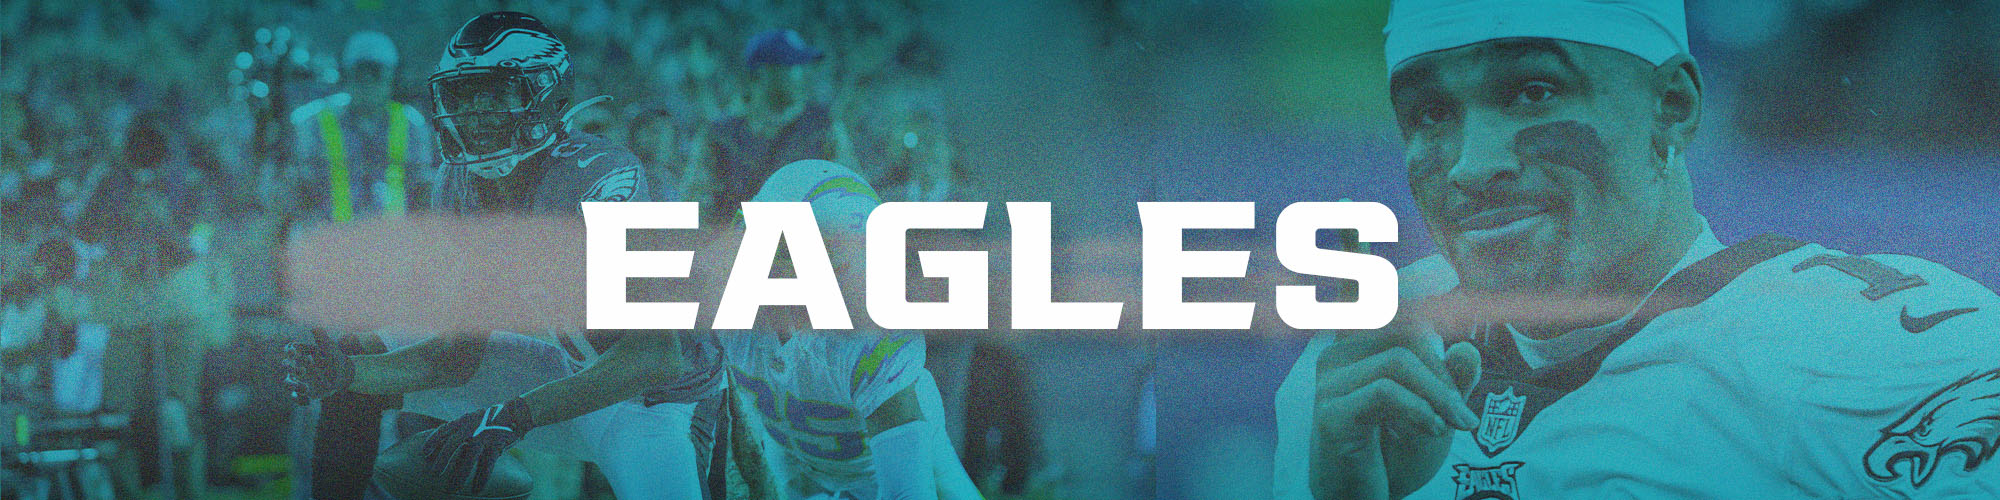 Philadelphia Eagles Football - Eagles News, Scores, Stats, Rumors & More